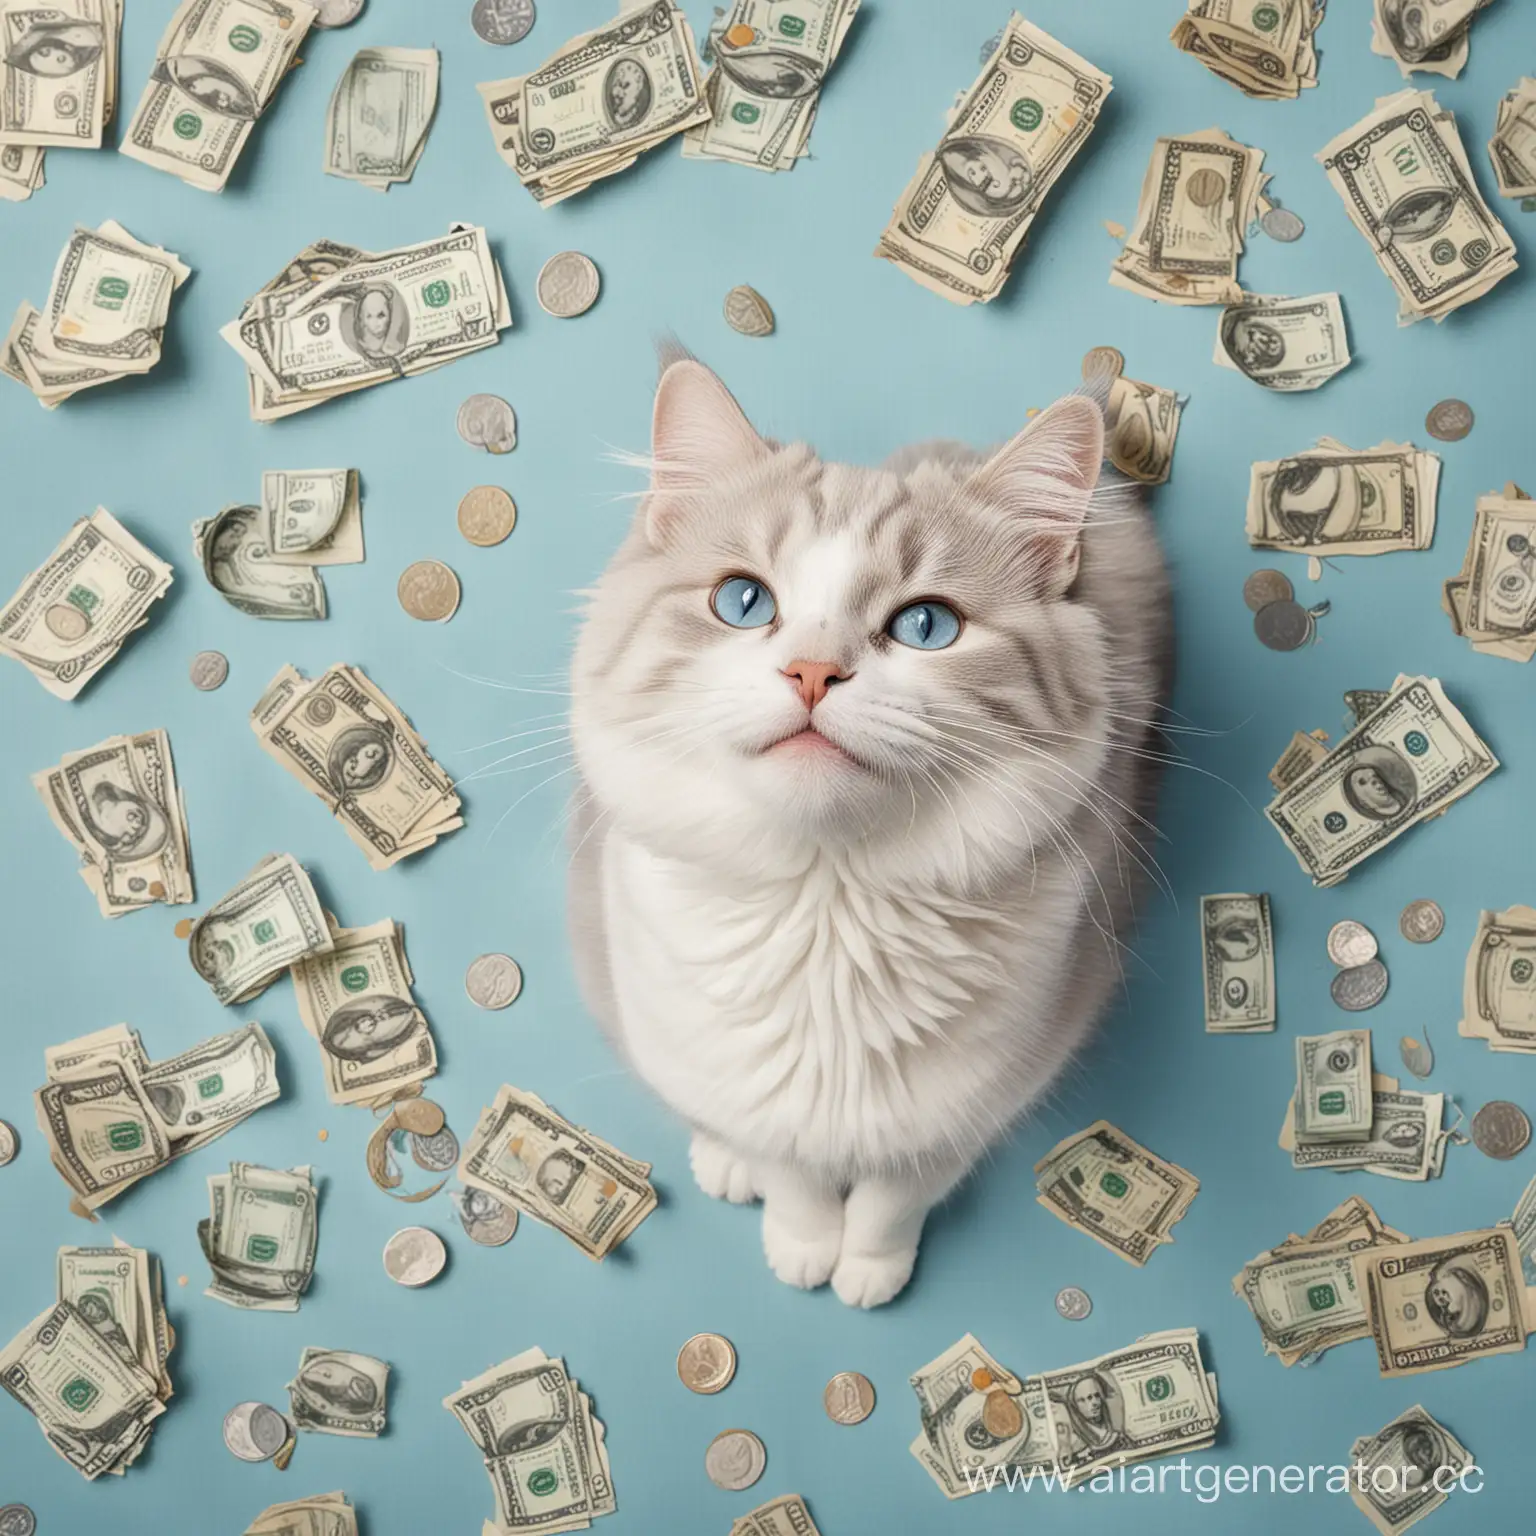 cat, smiling, money, spring mood, background color is blue #91D0FA